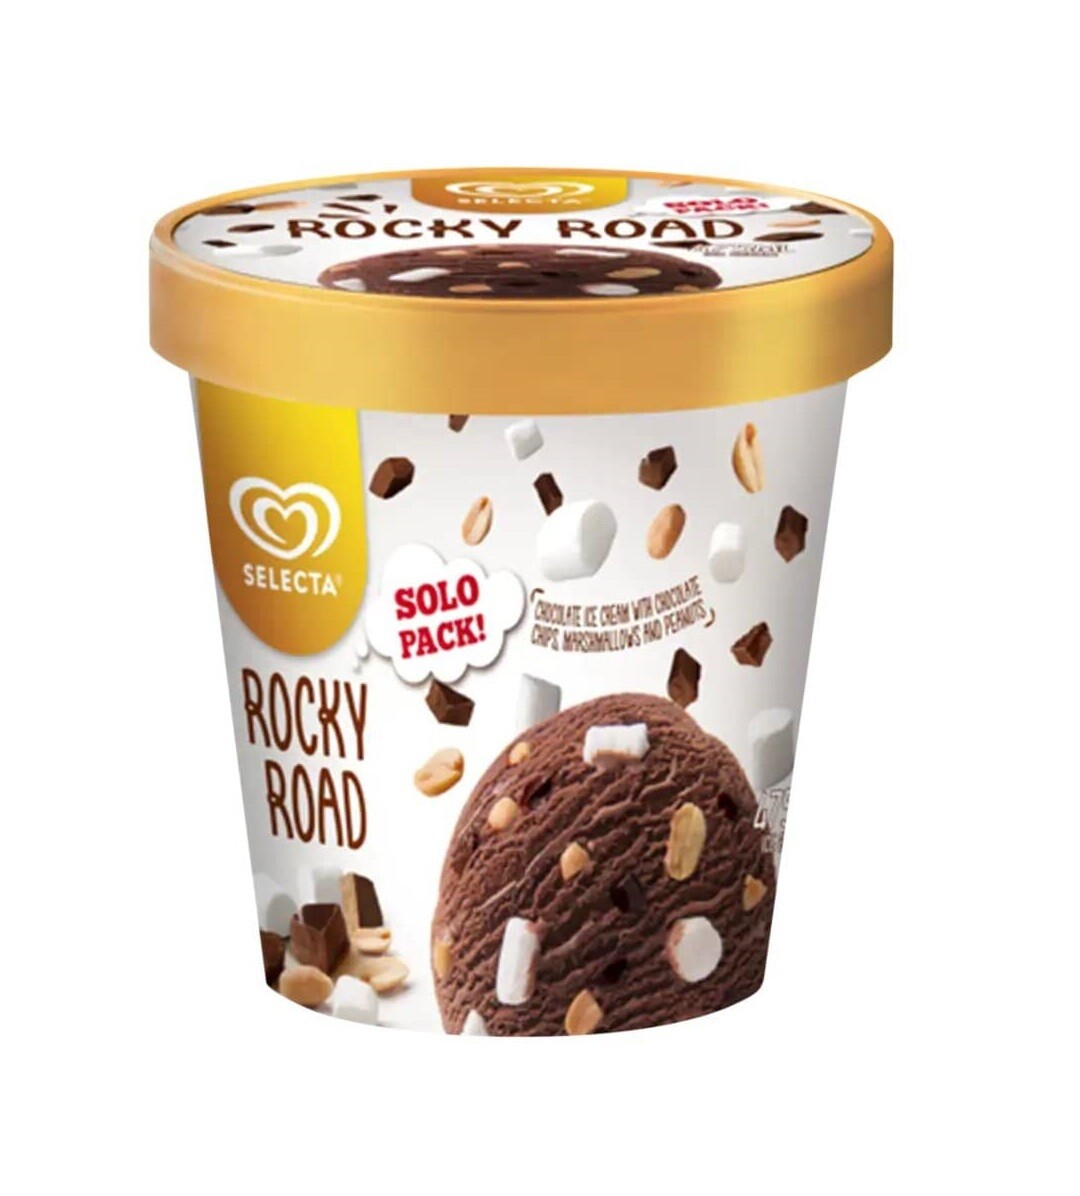 Selecta ROCKY ROAD Ice Cream Solo Pack 475ml